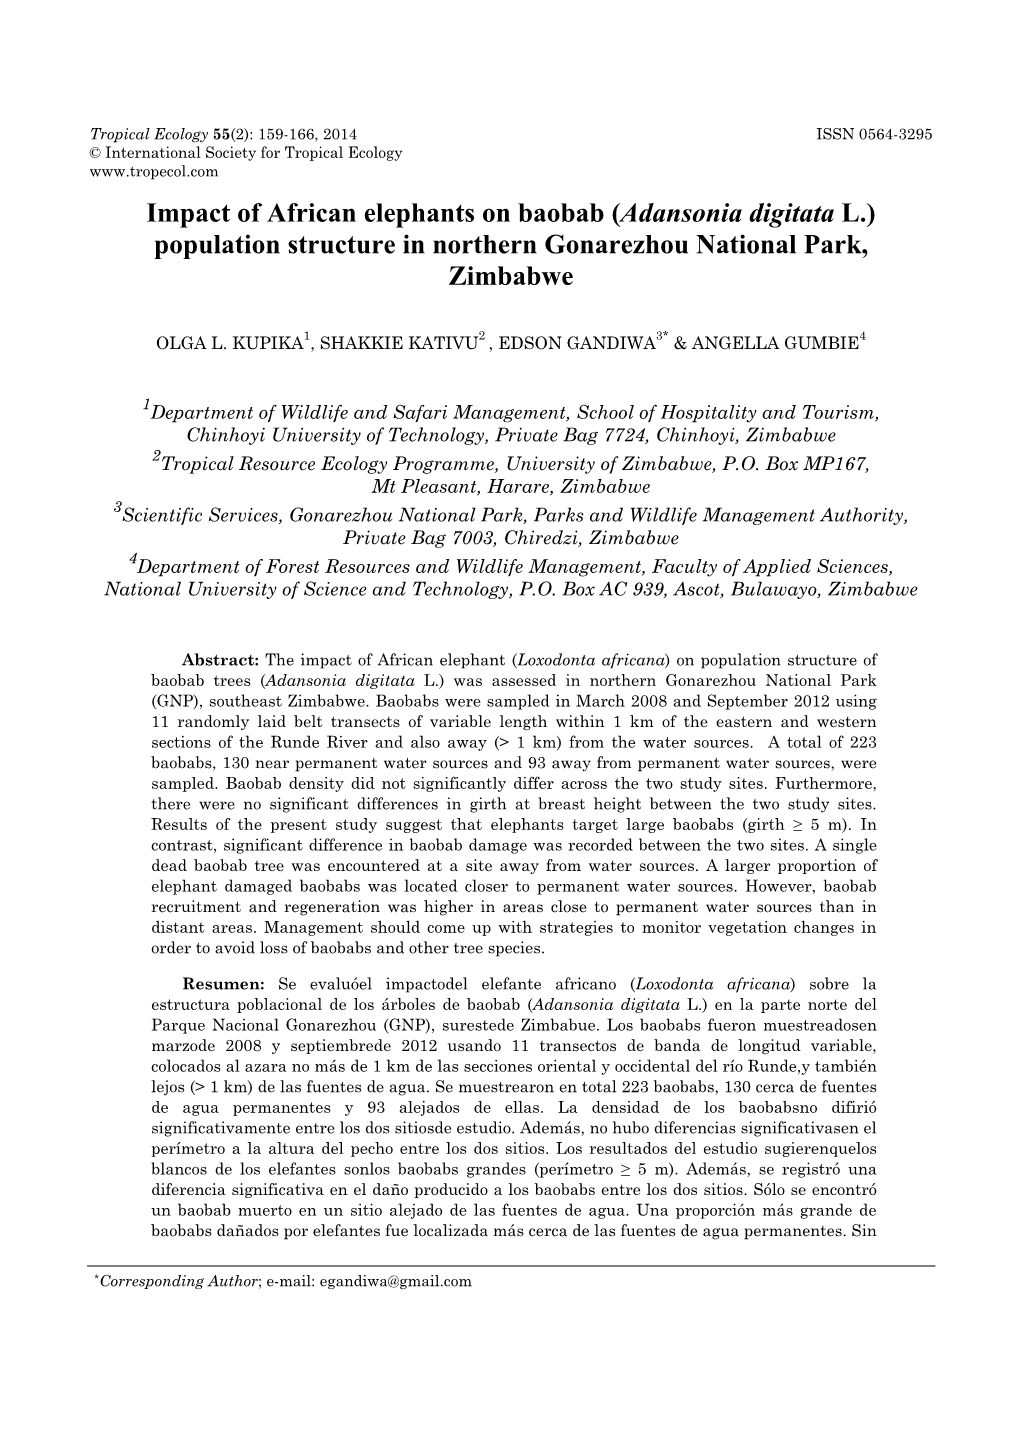 Adansonia Digitata L.) Population Structure in Northern Gonarezhou National Park, Zimbabwe